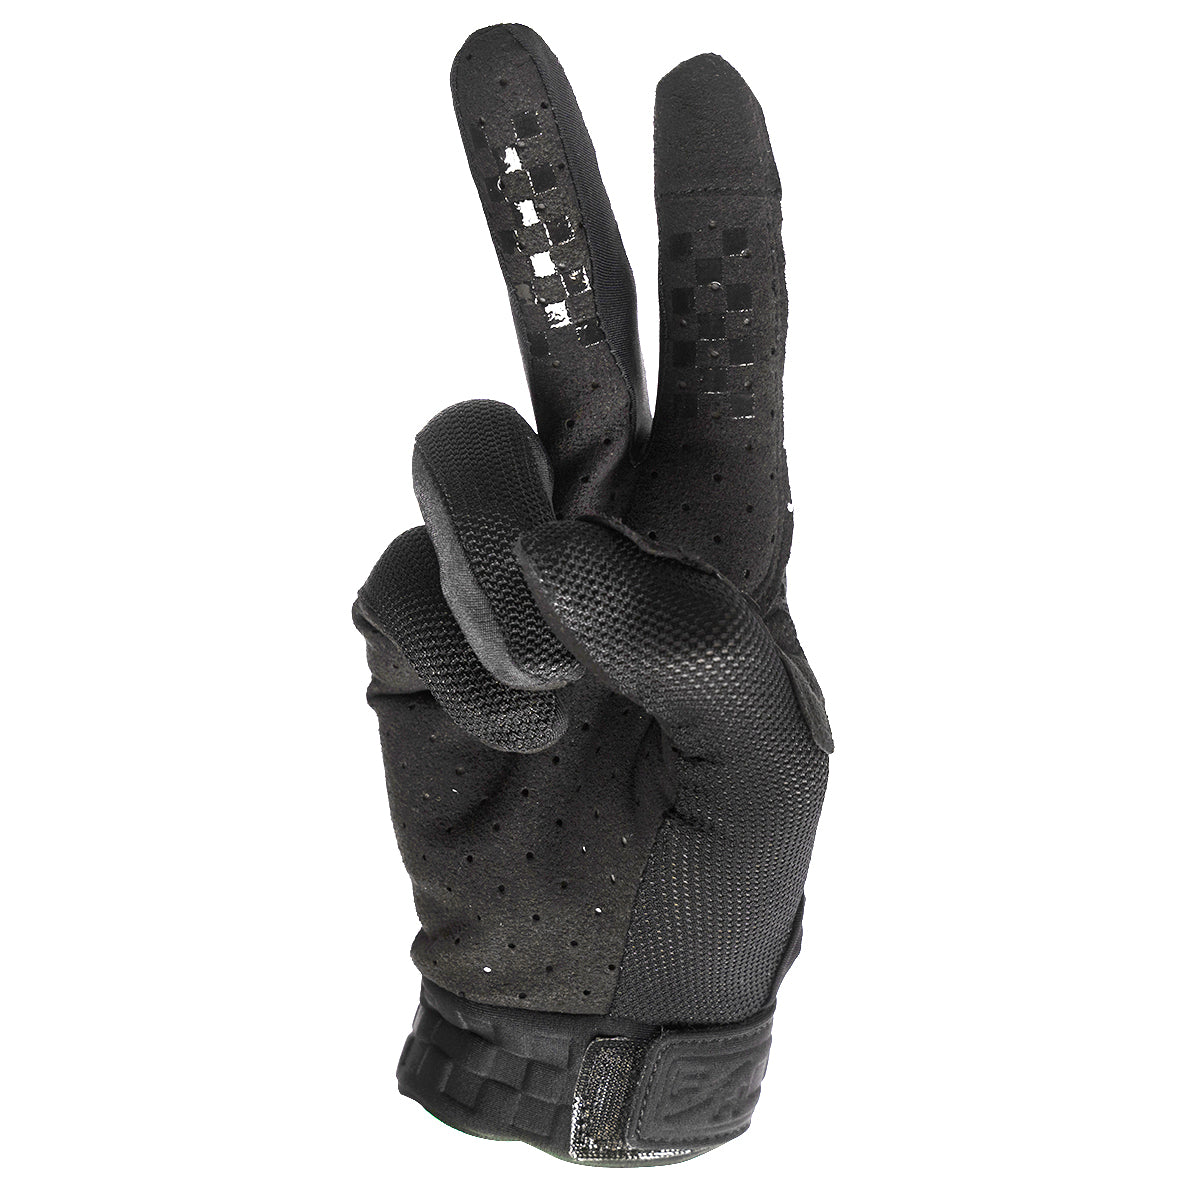 Vapor Glove - Black/Black